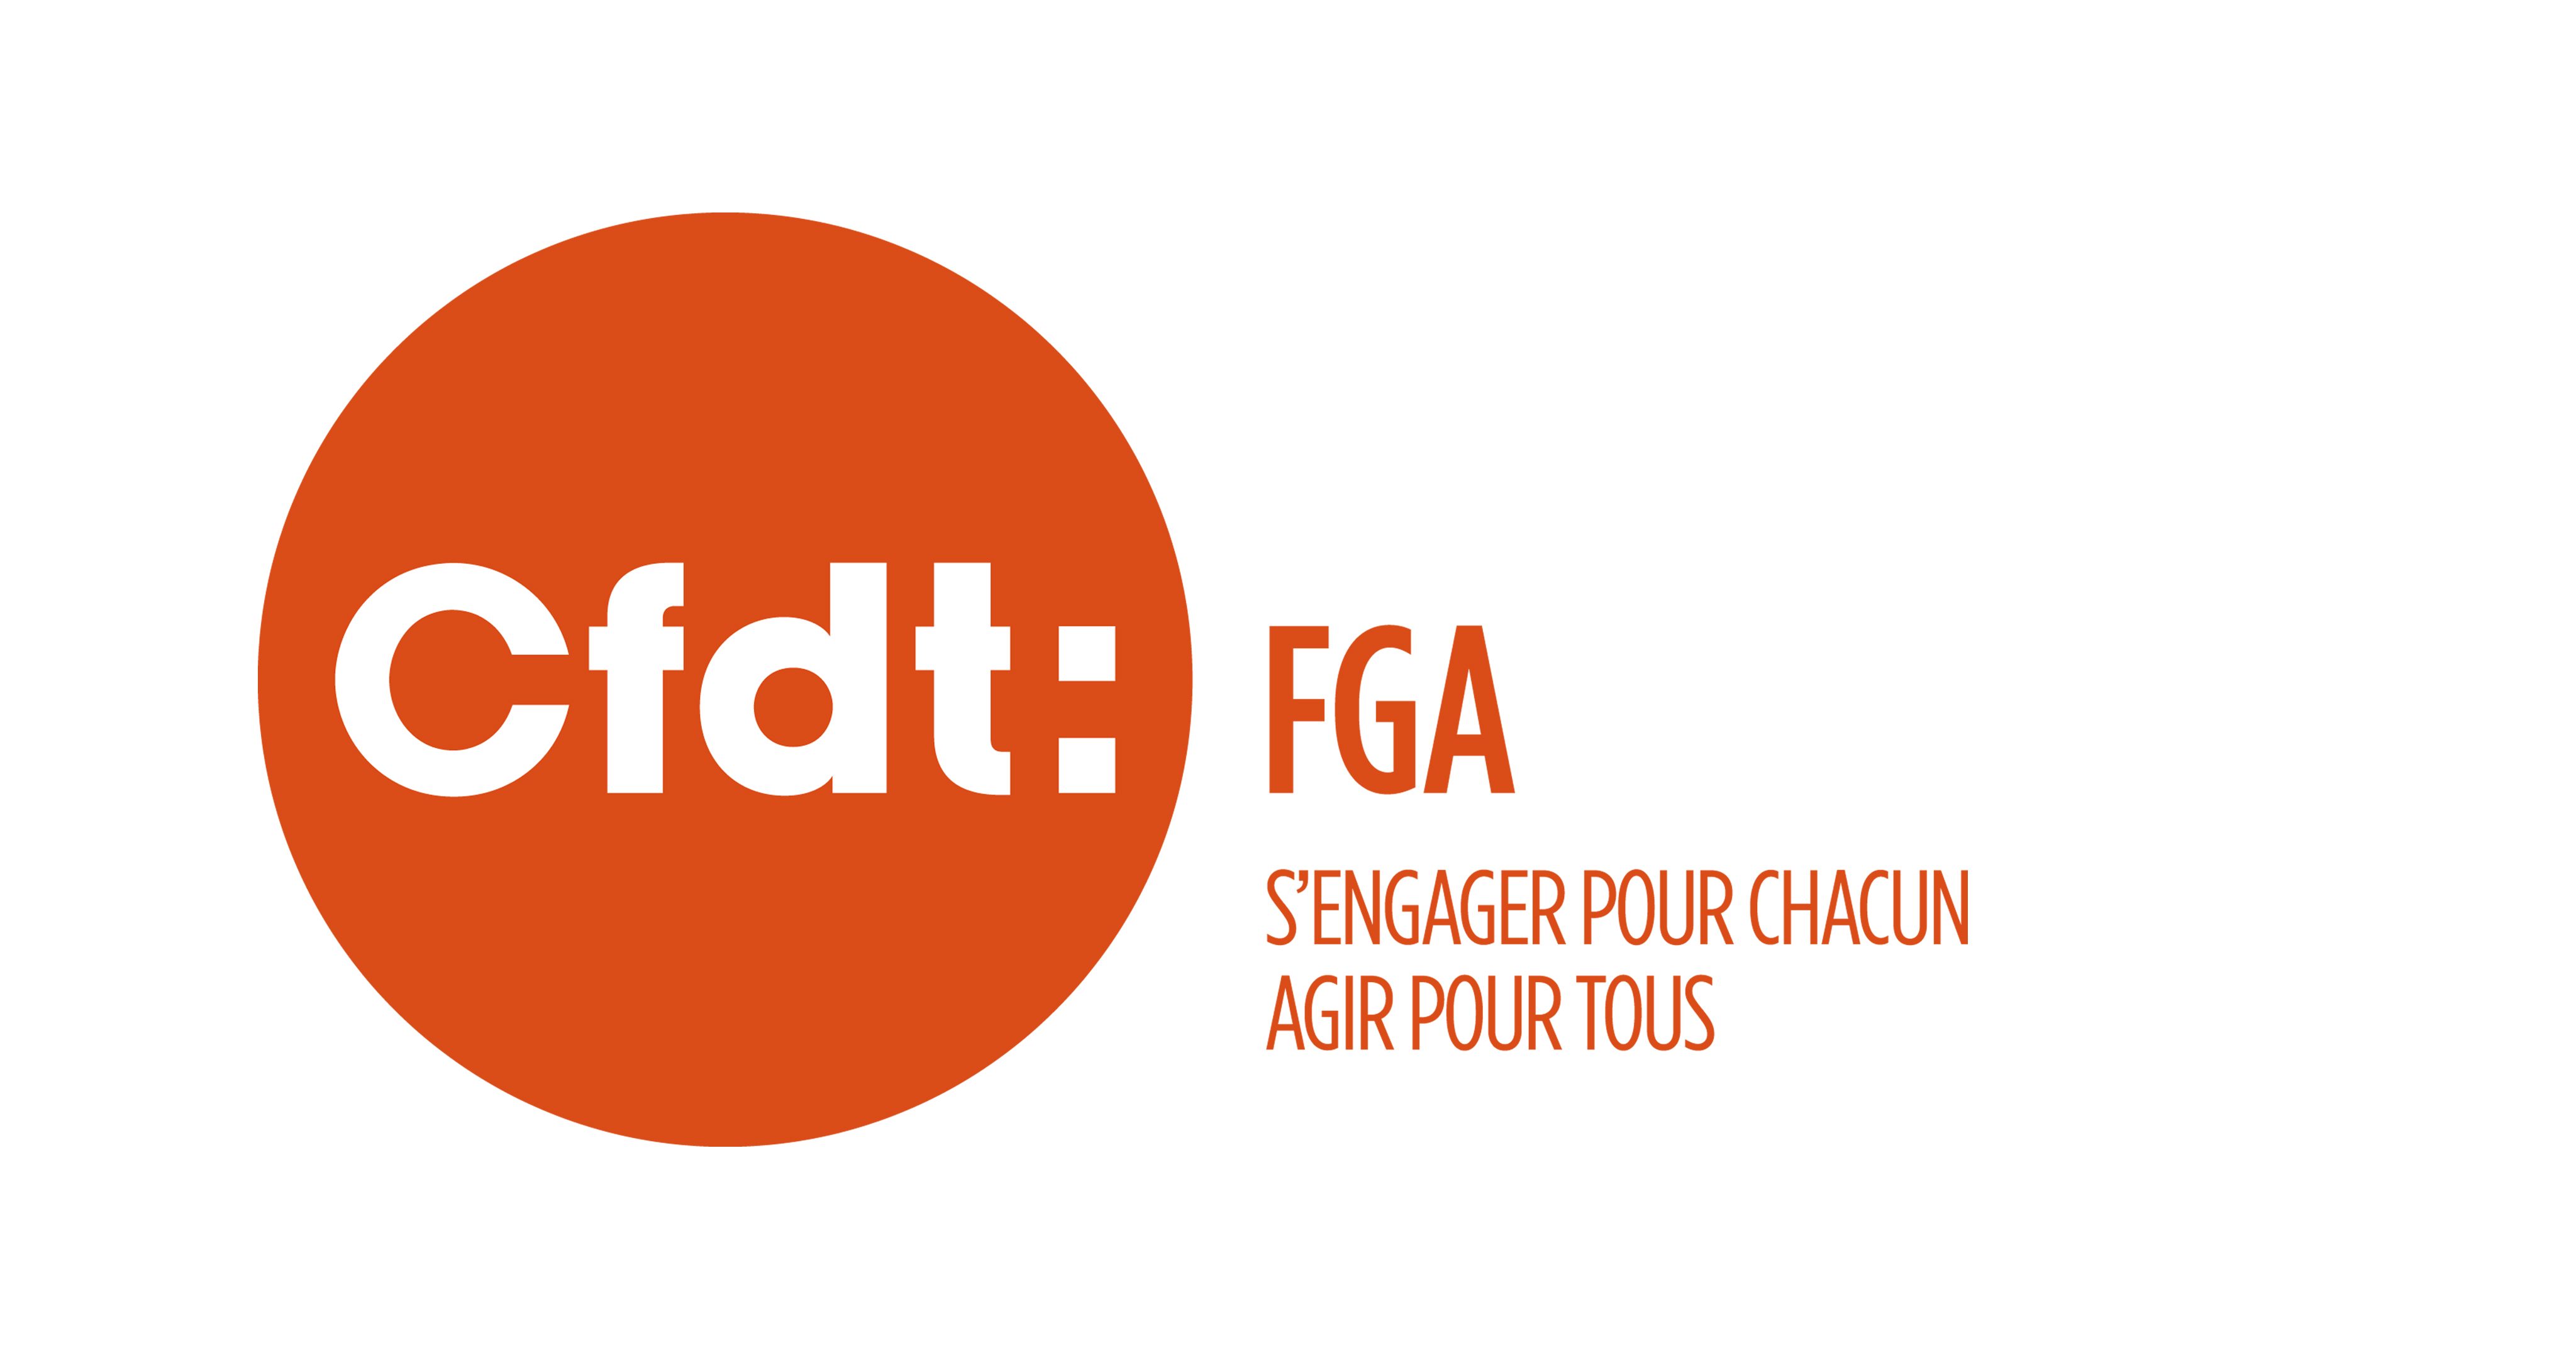 FGA-CFDT, BRANCHE CREDIT AGRICOLE